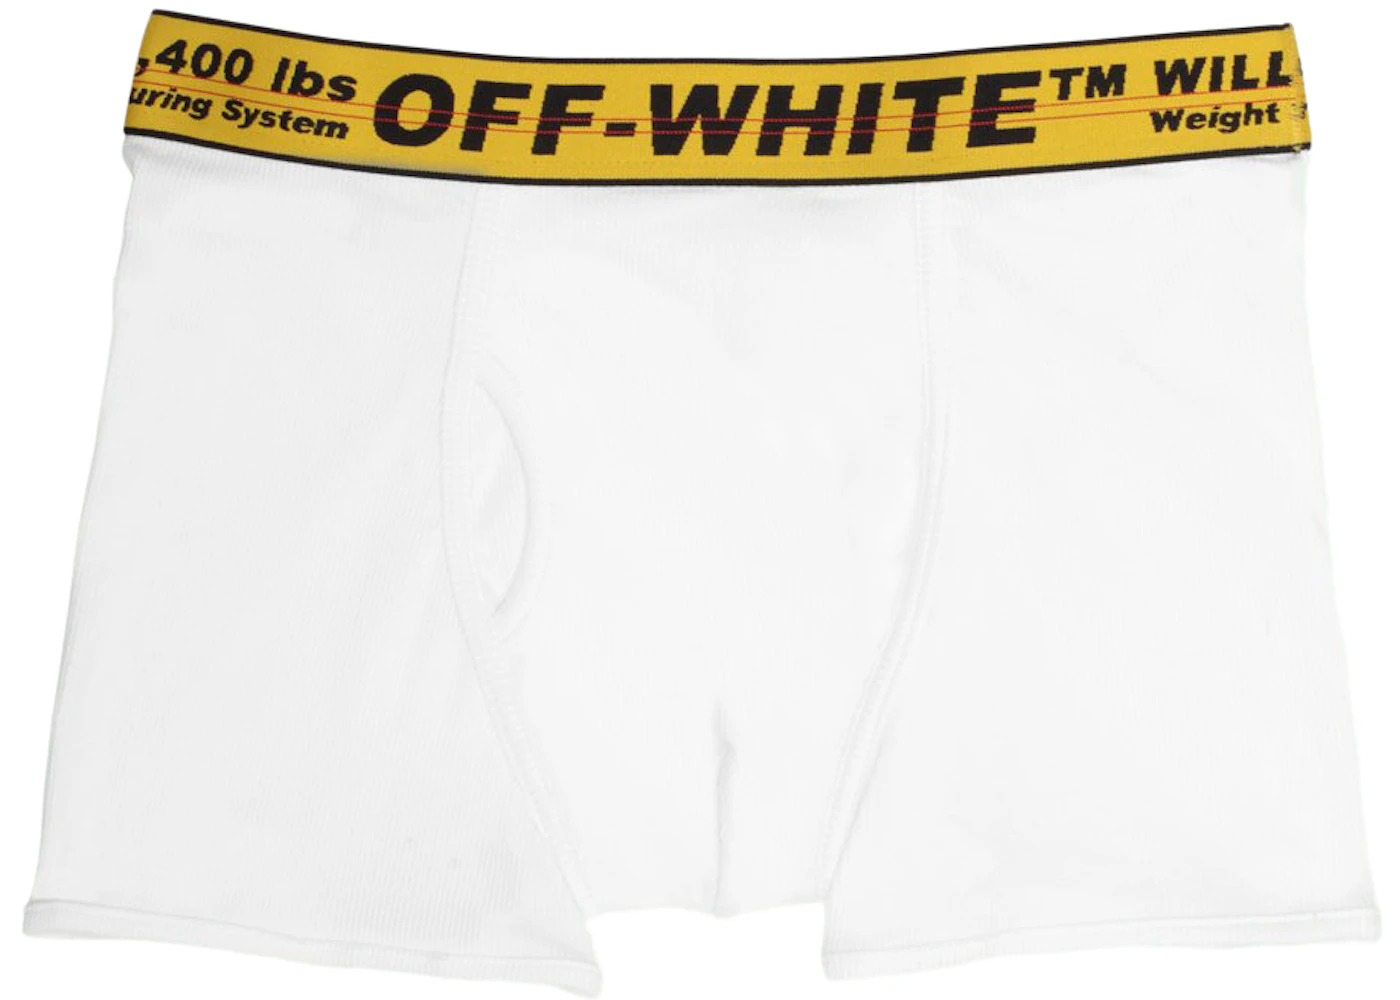 OFF-WHITE Single Pack Stretch Cotton Boxer Briefs White/Yellow/Black